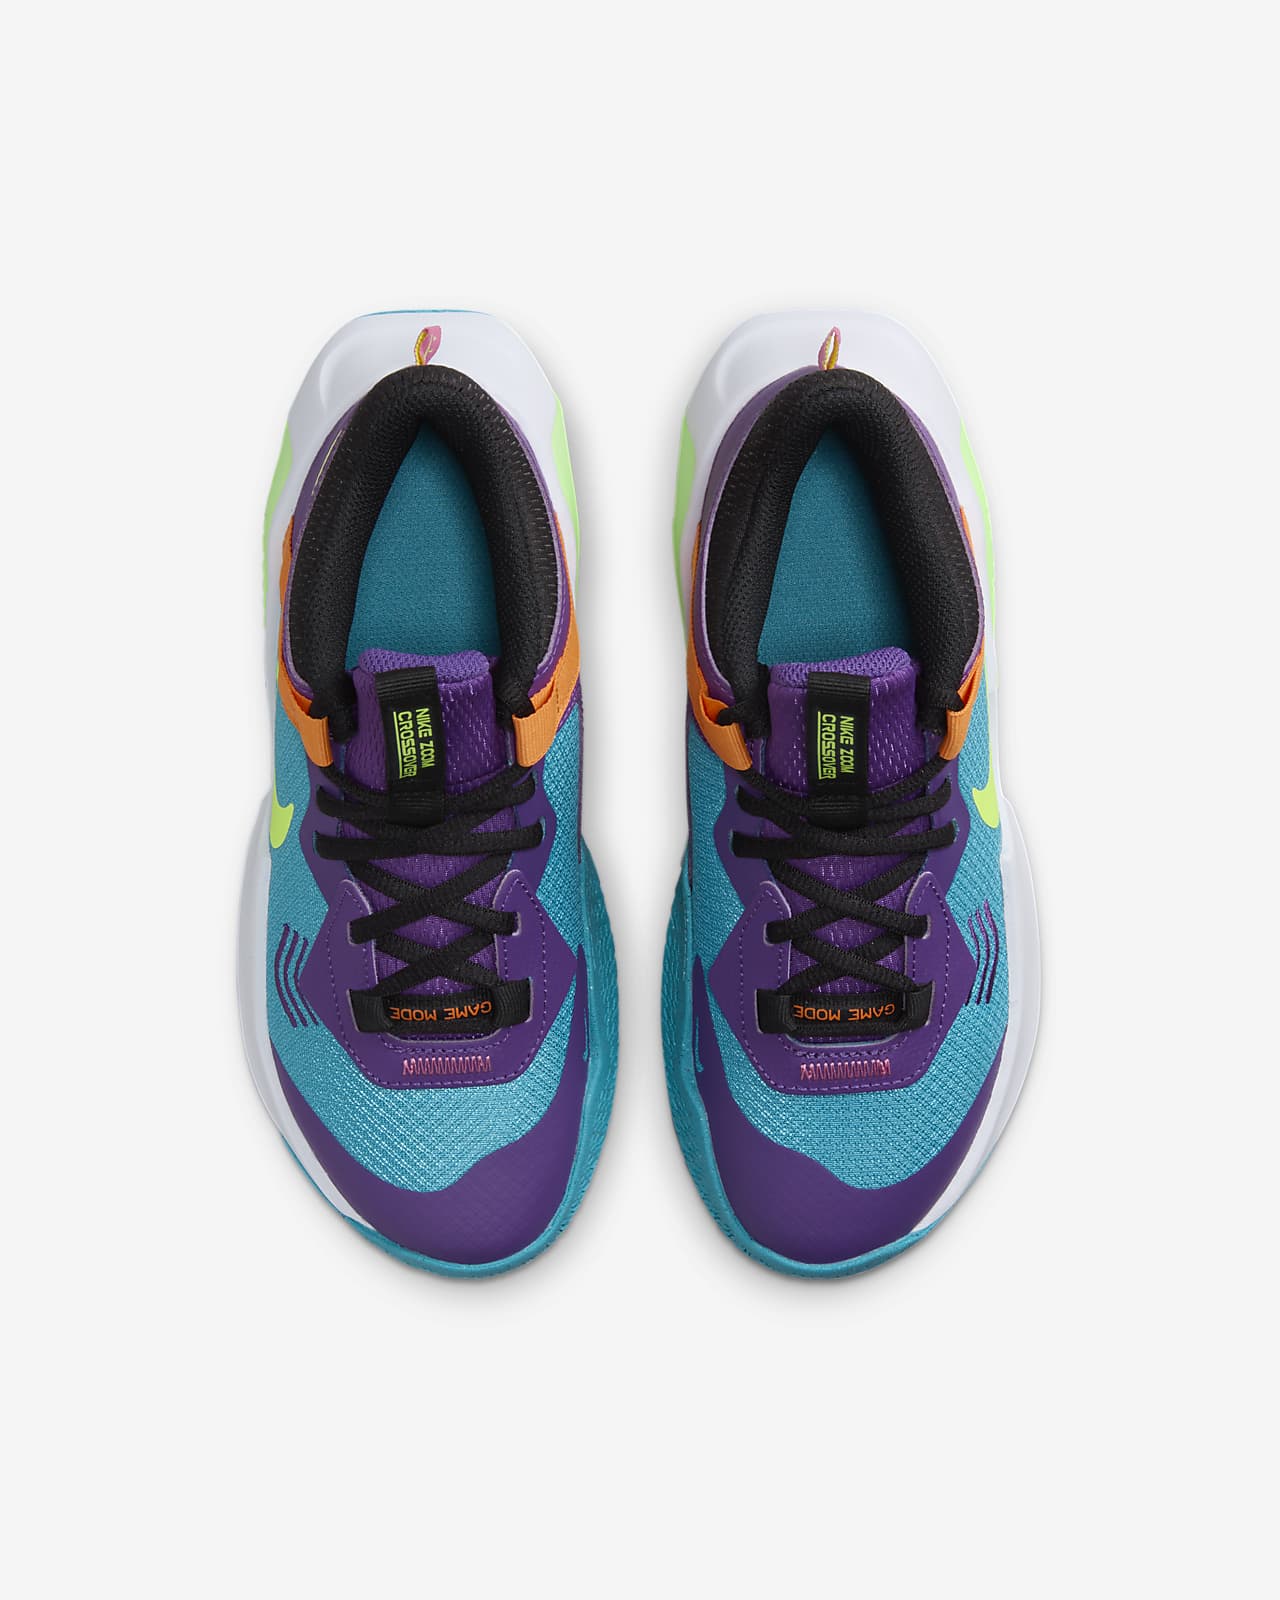 Kids Nike Zoom Air Shoes.